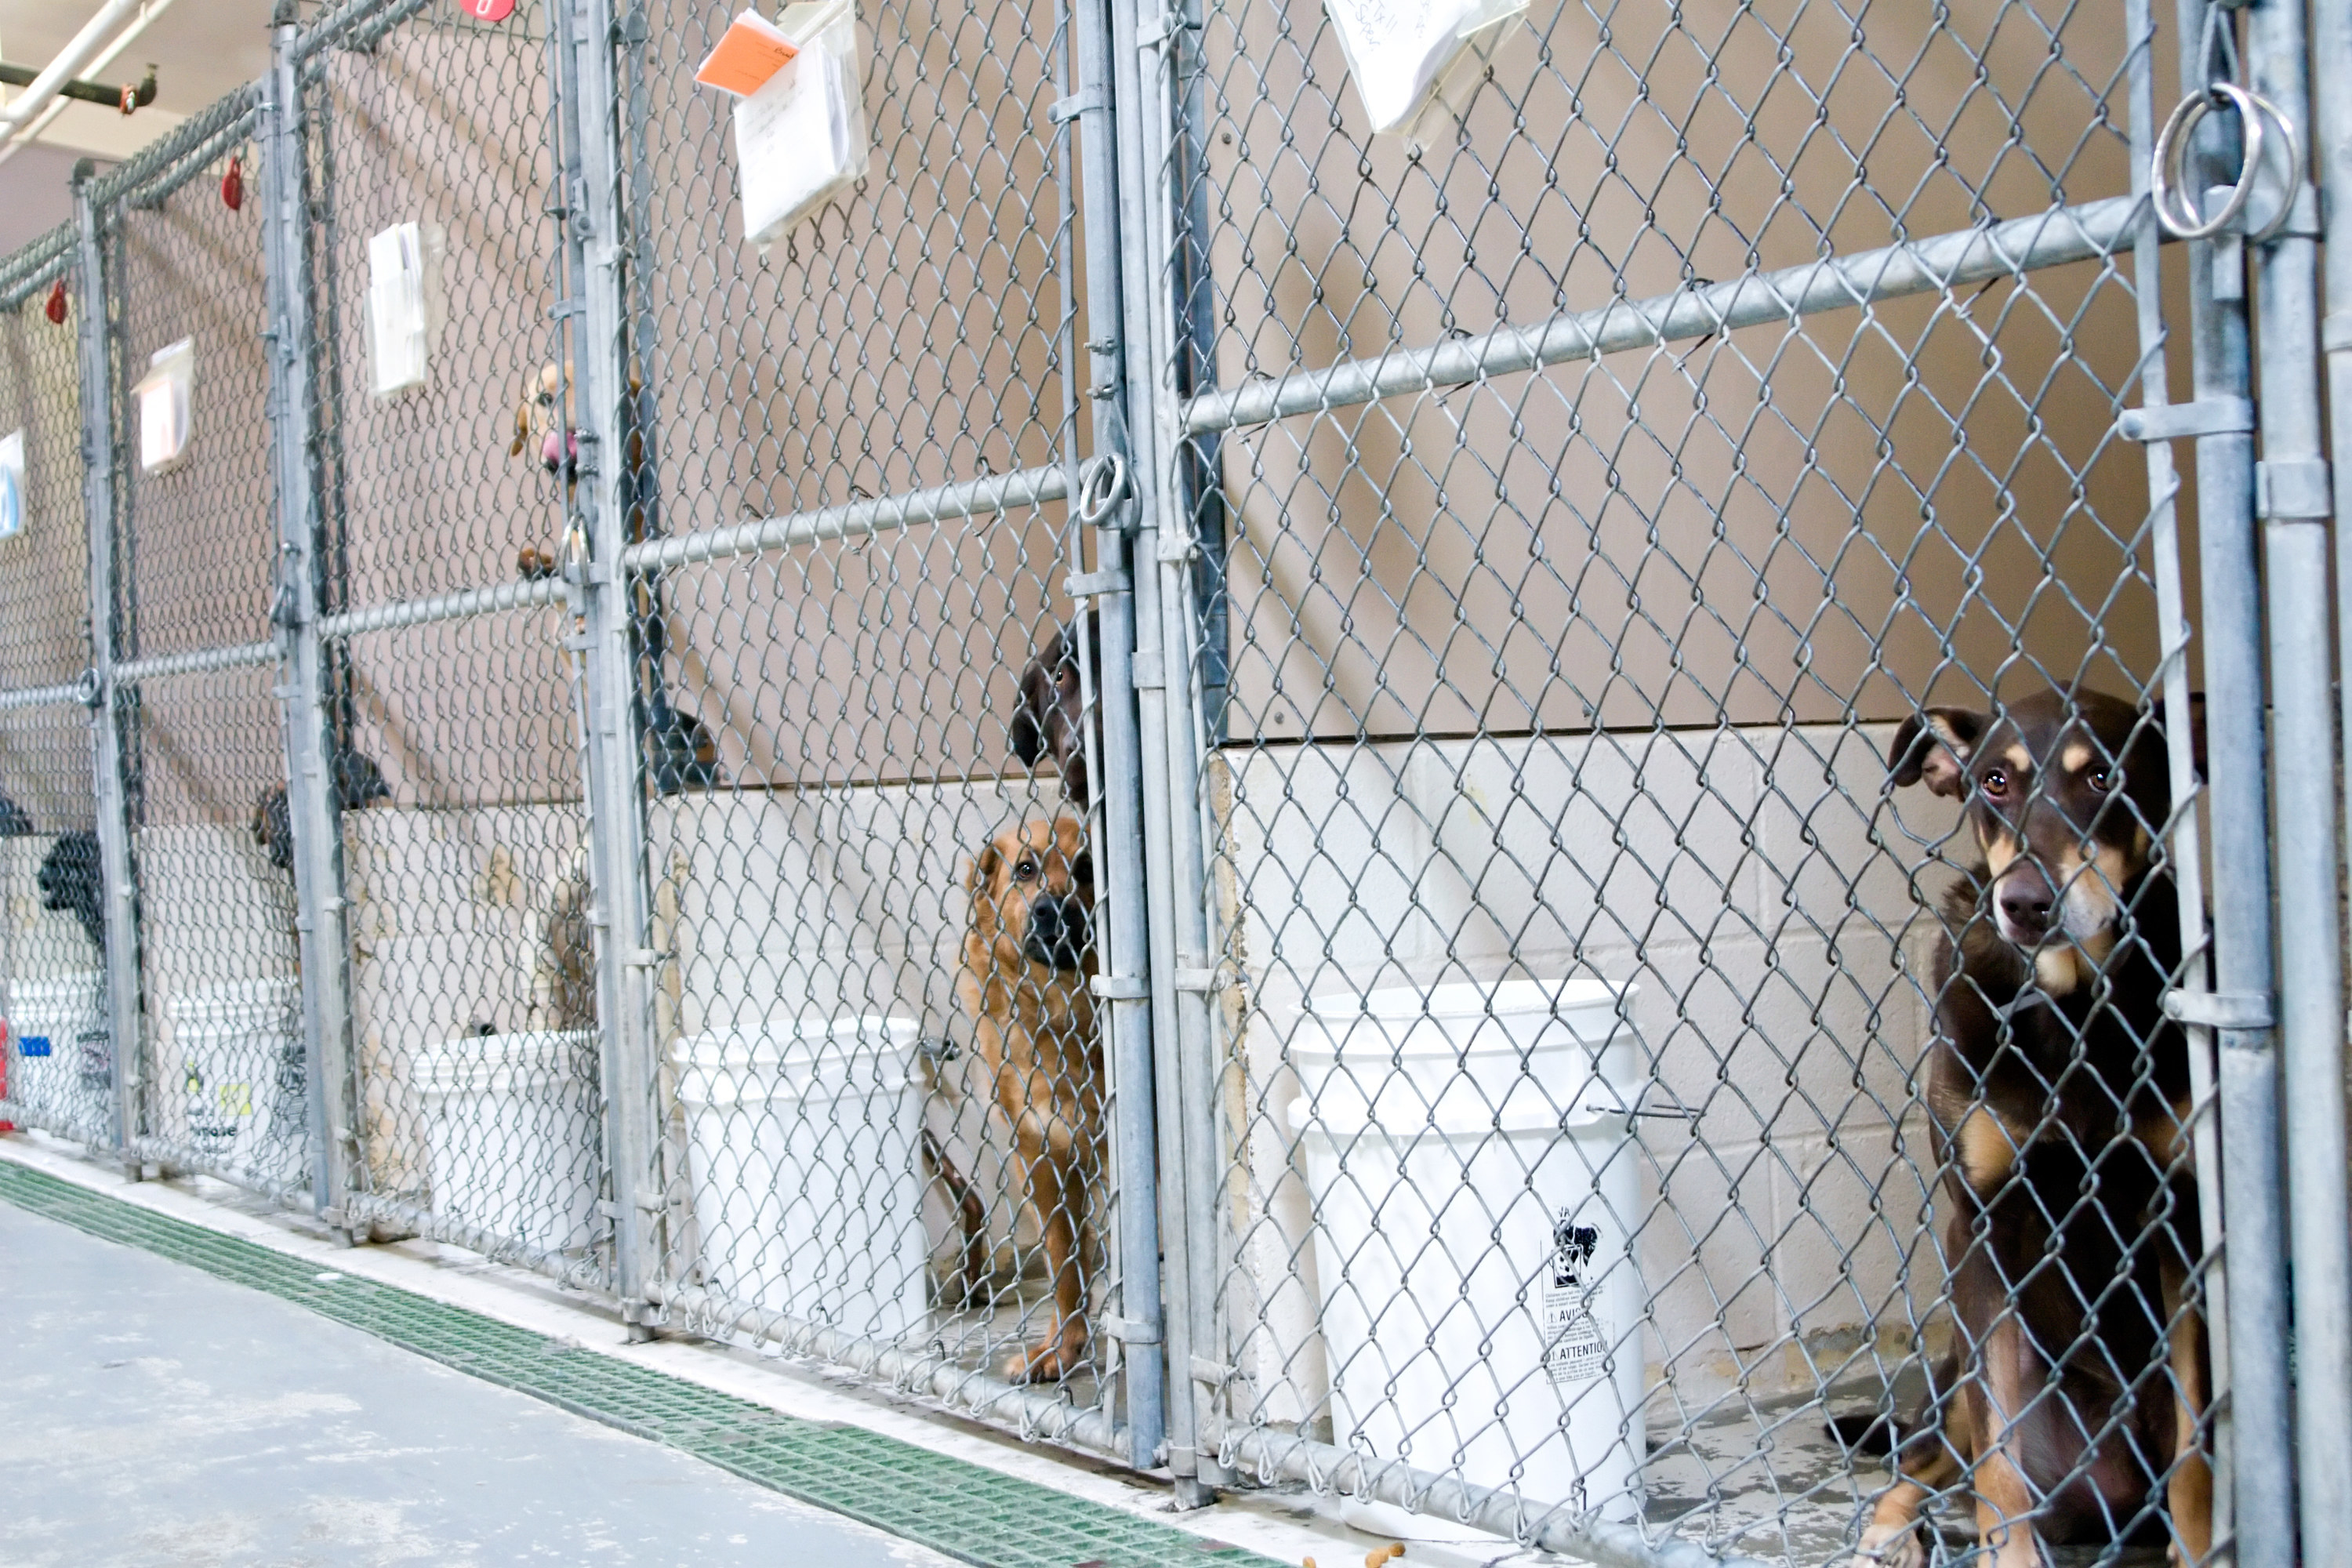 Dogs in kennels